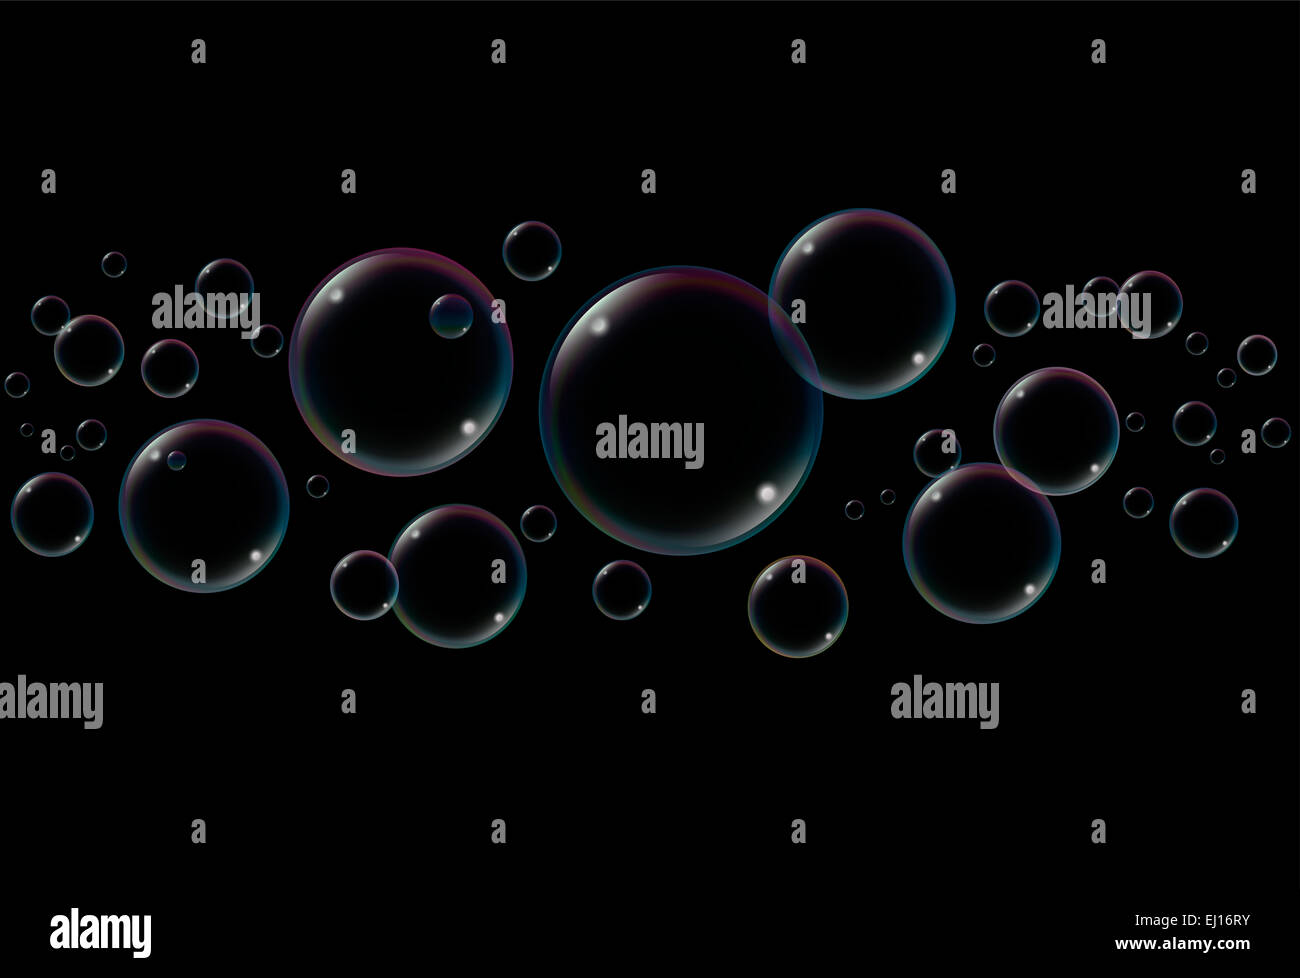 Soap bubbles illustration on black background. Stock Photo